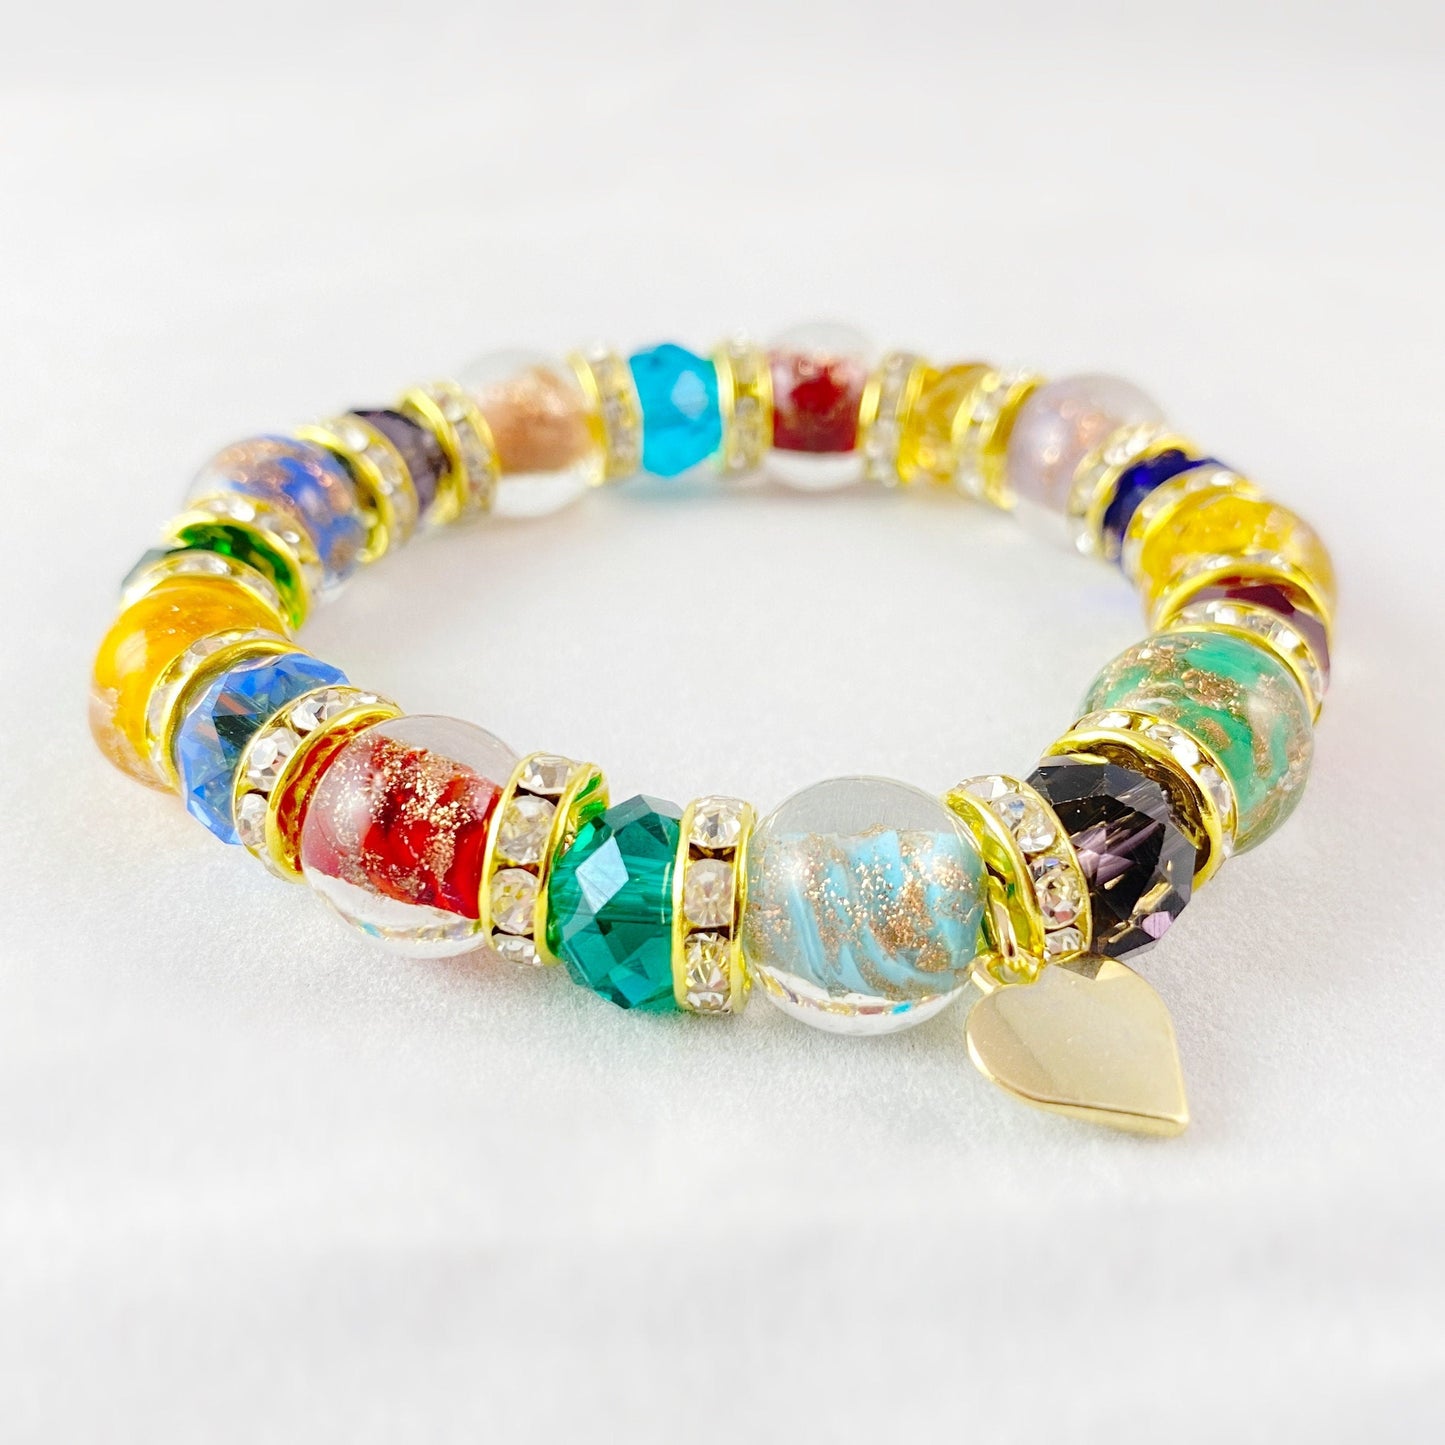 Rainbow Beaded Venetian Glass Bracelet - Handmade in Italy, Colorful Murano Glass